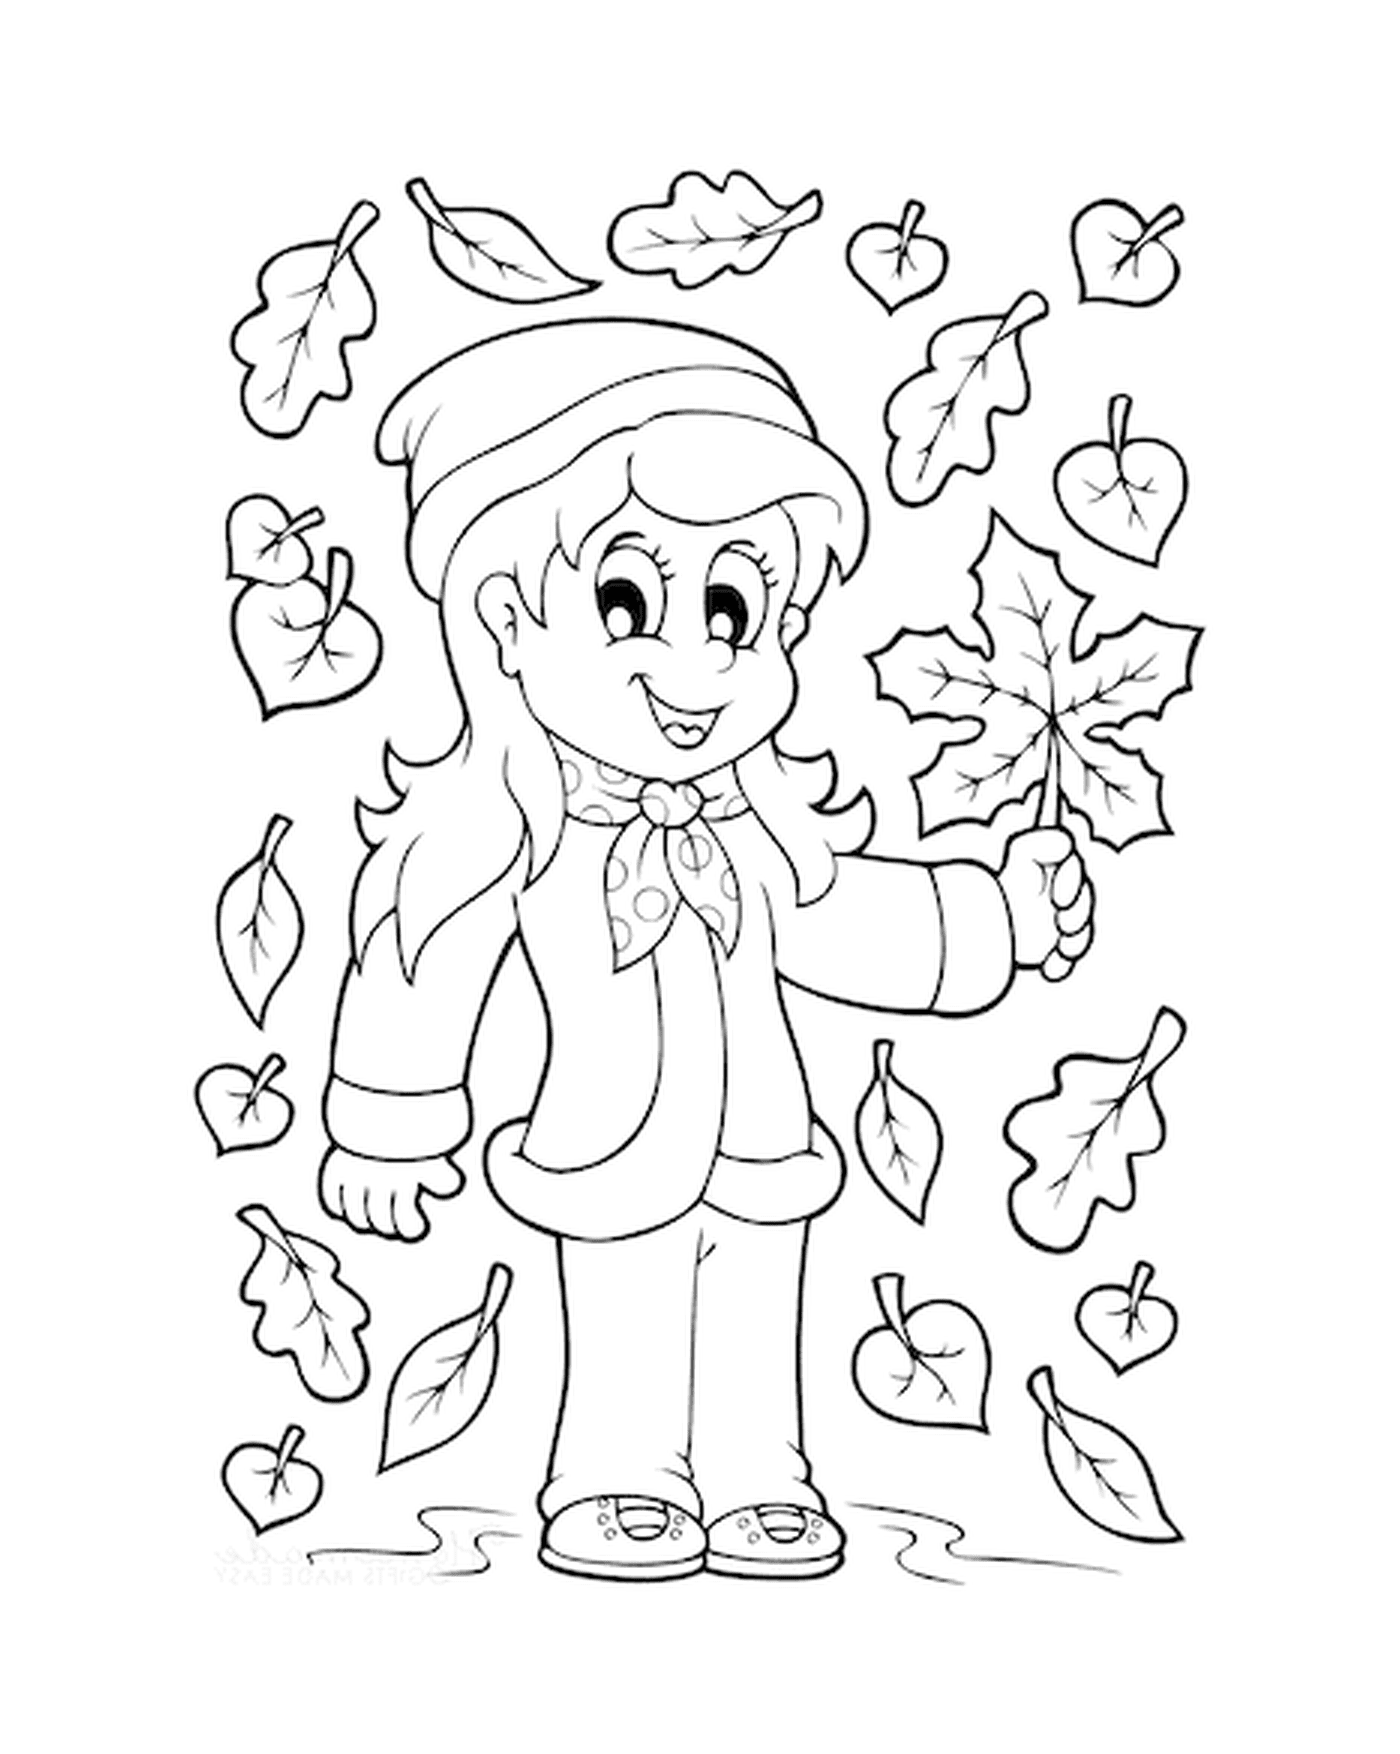  A girl holding a leaf near a tree 